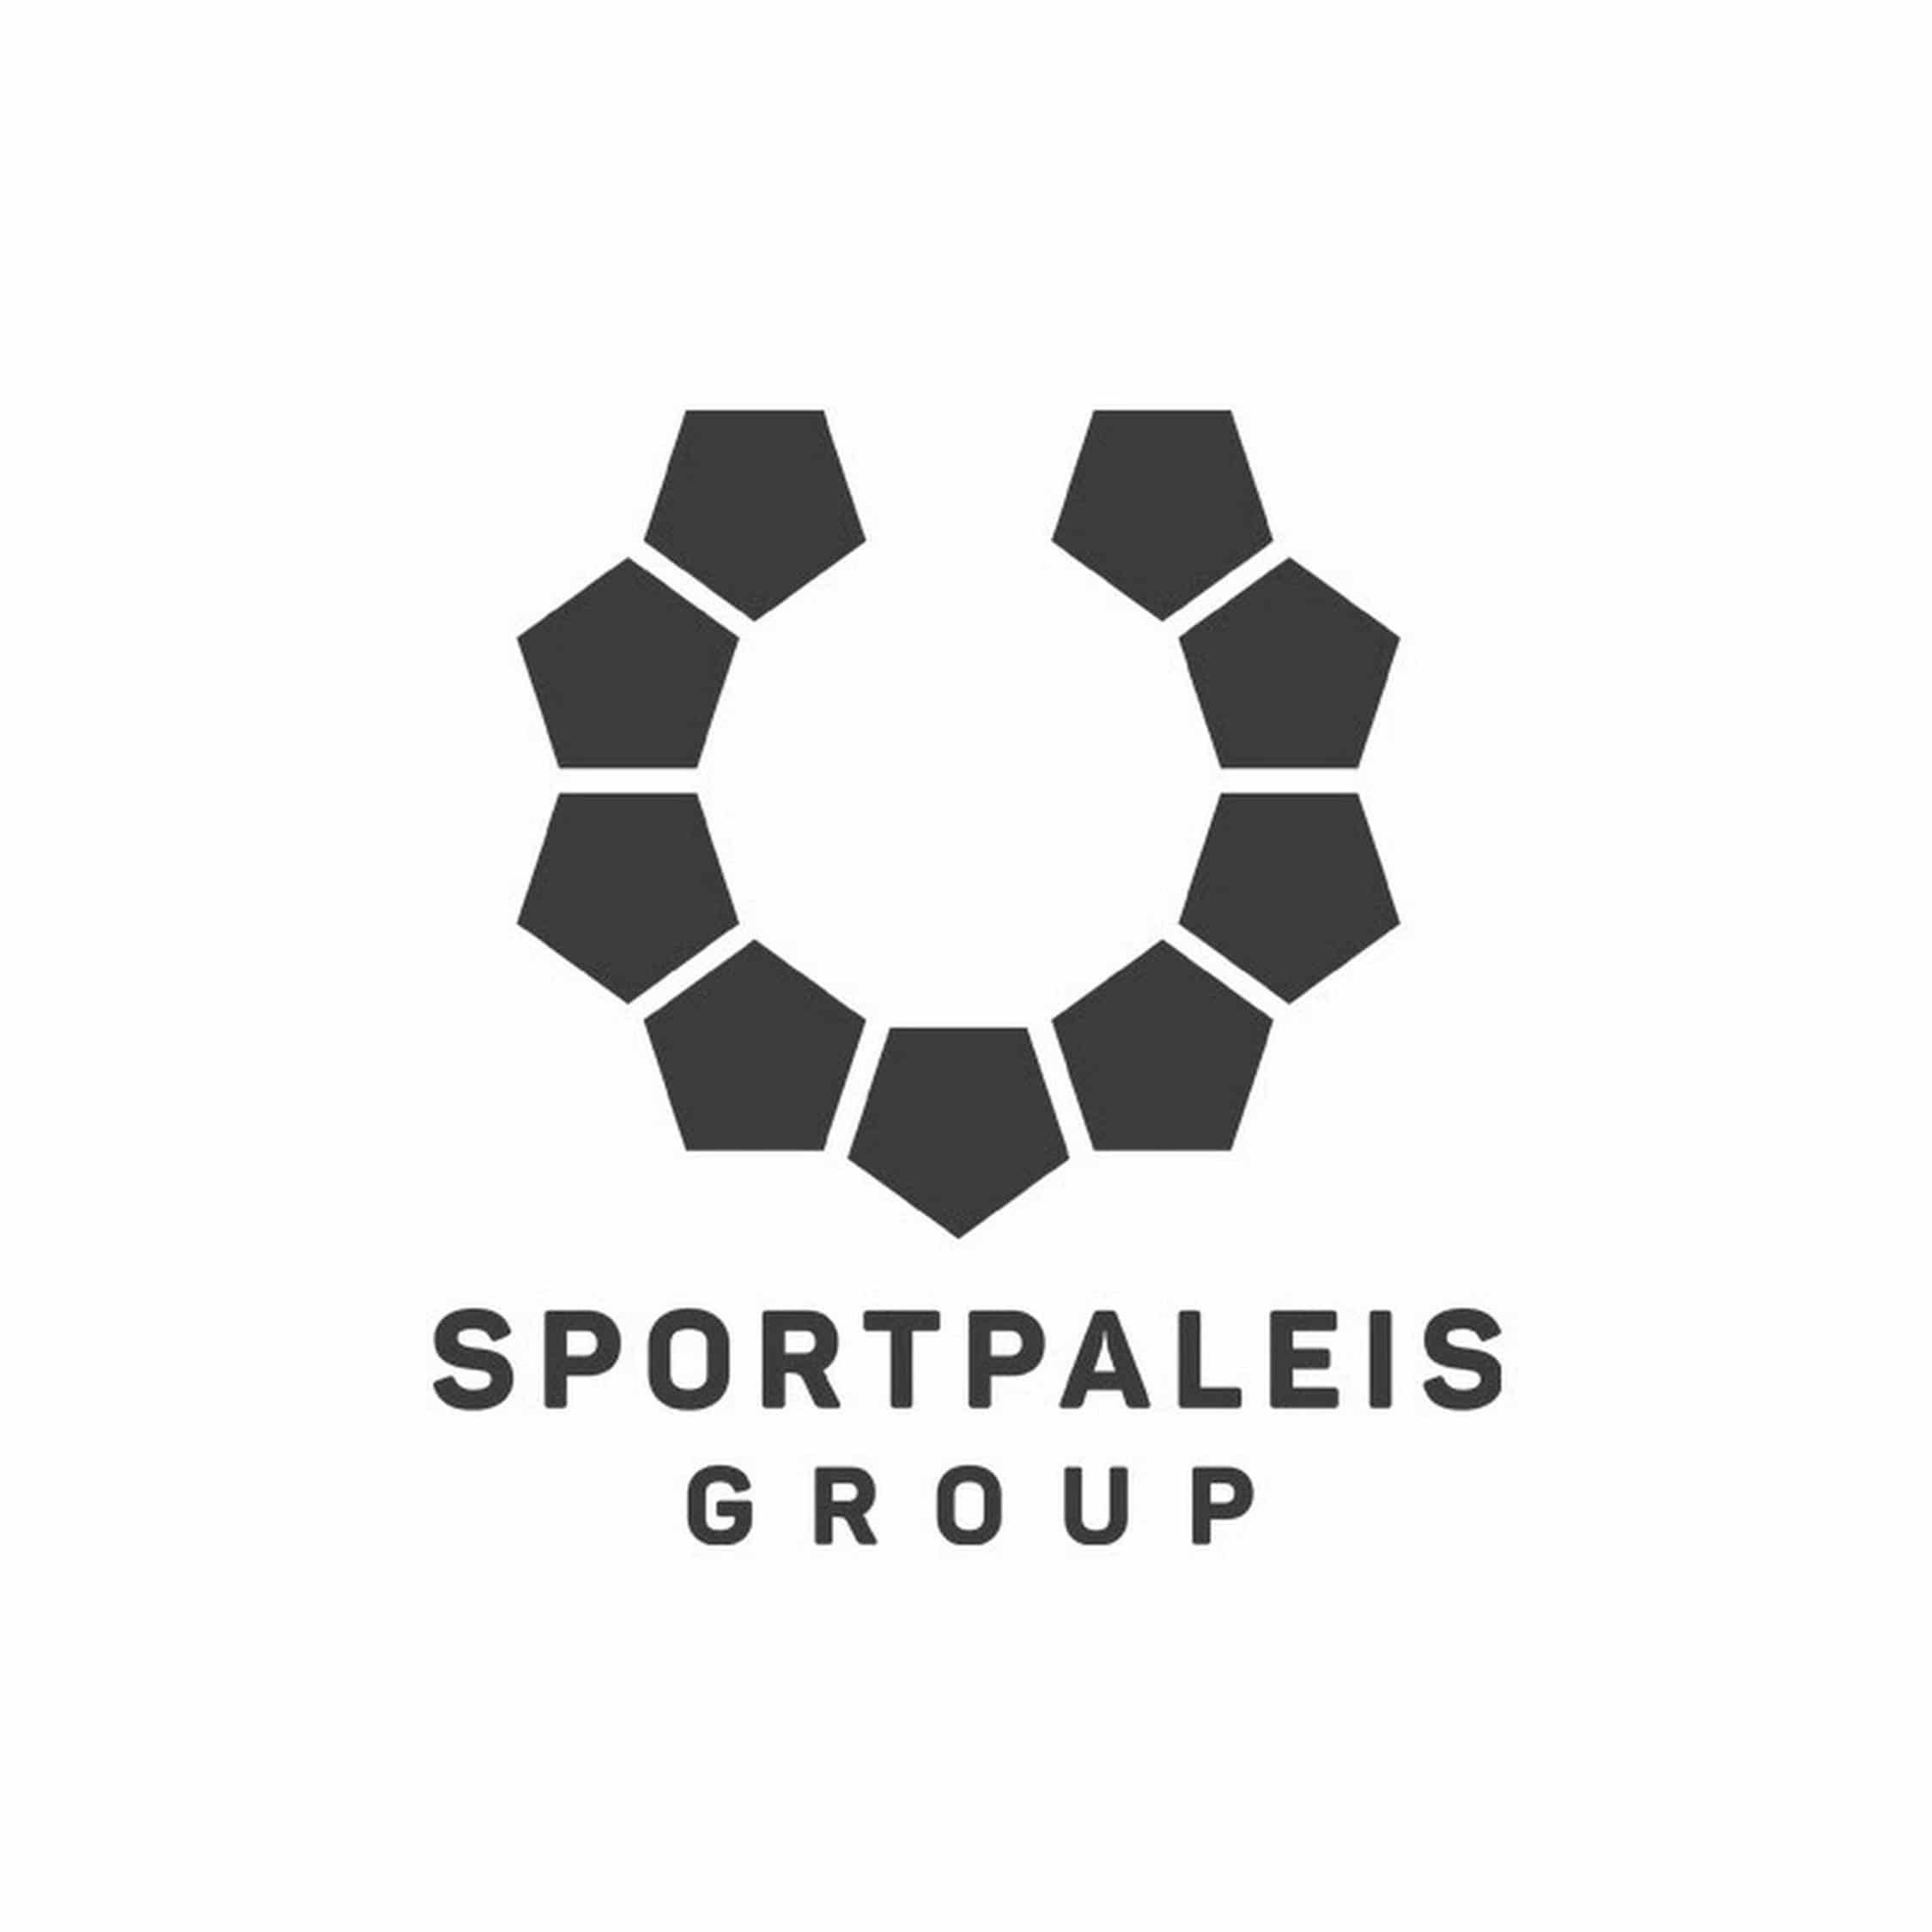 Sportpaleis Group Koen Belien - About Koen Beliën